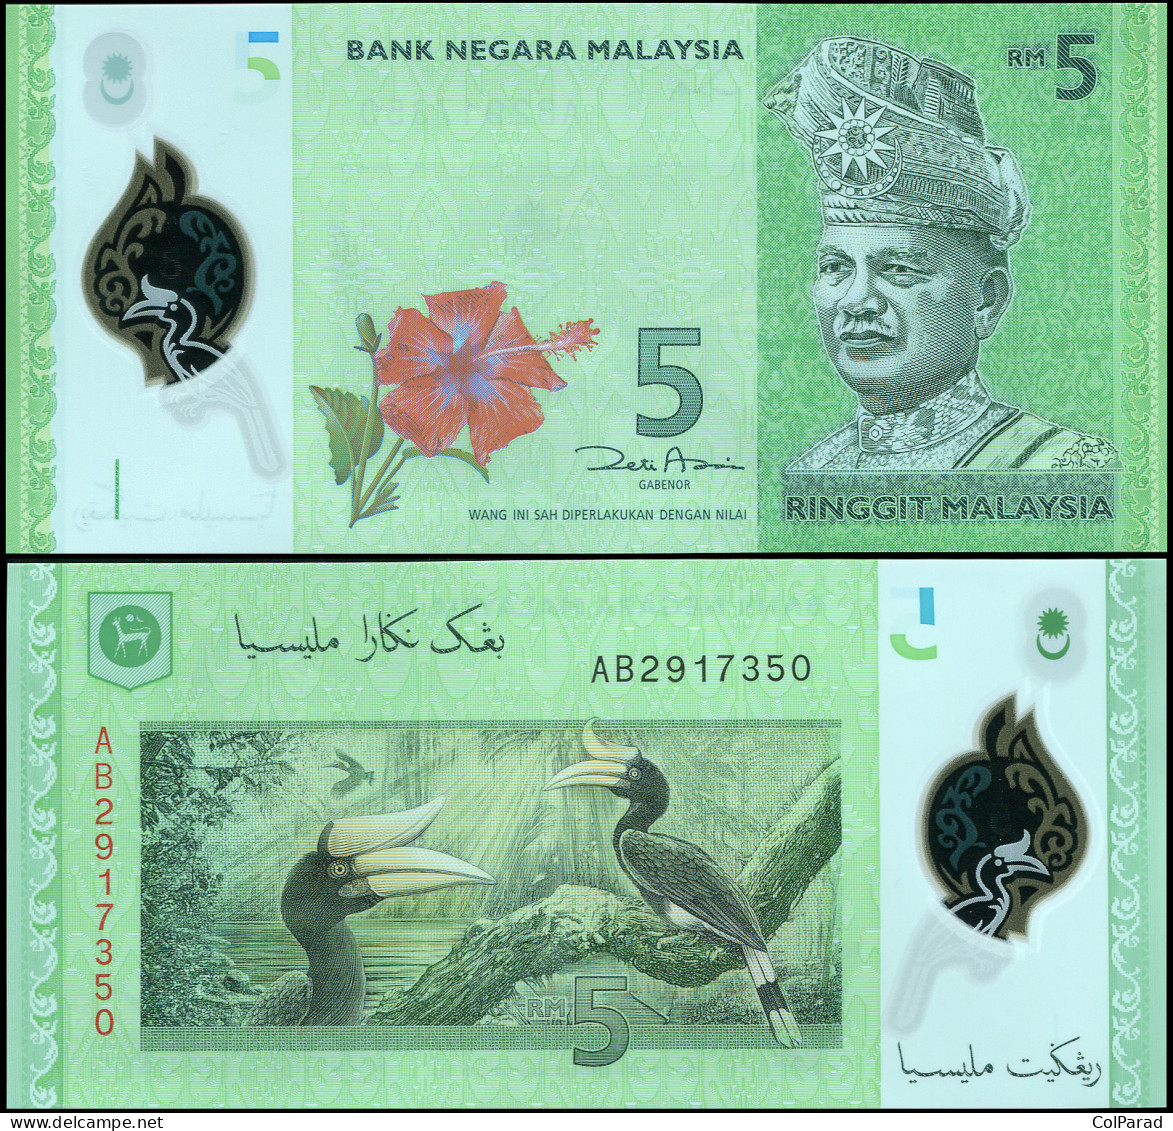 MALAYSIA 5 RINGGIT - ND (2012) - Polymer Unc - P.52a Banknote - Malaysia